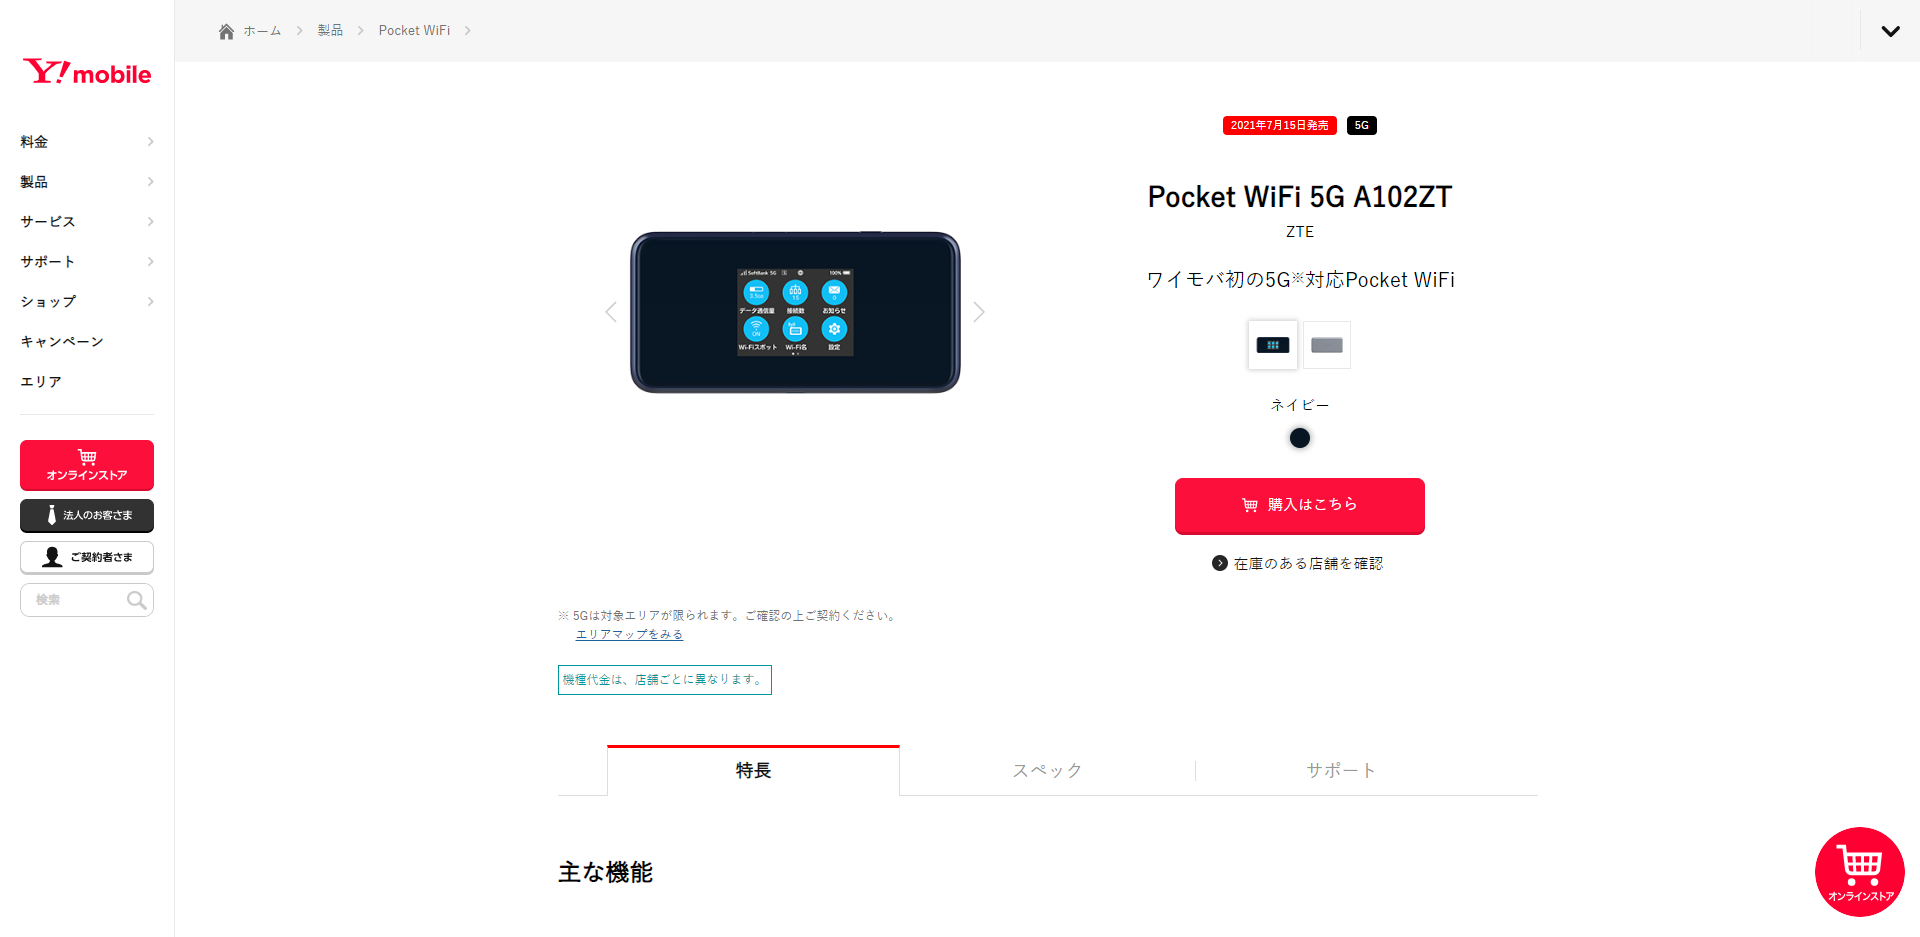 Pocket WiFi 5G A102ZT